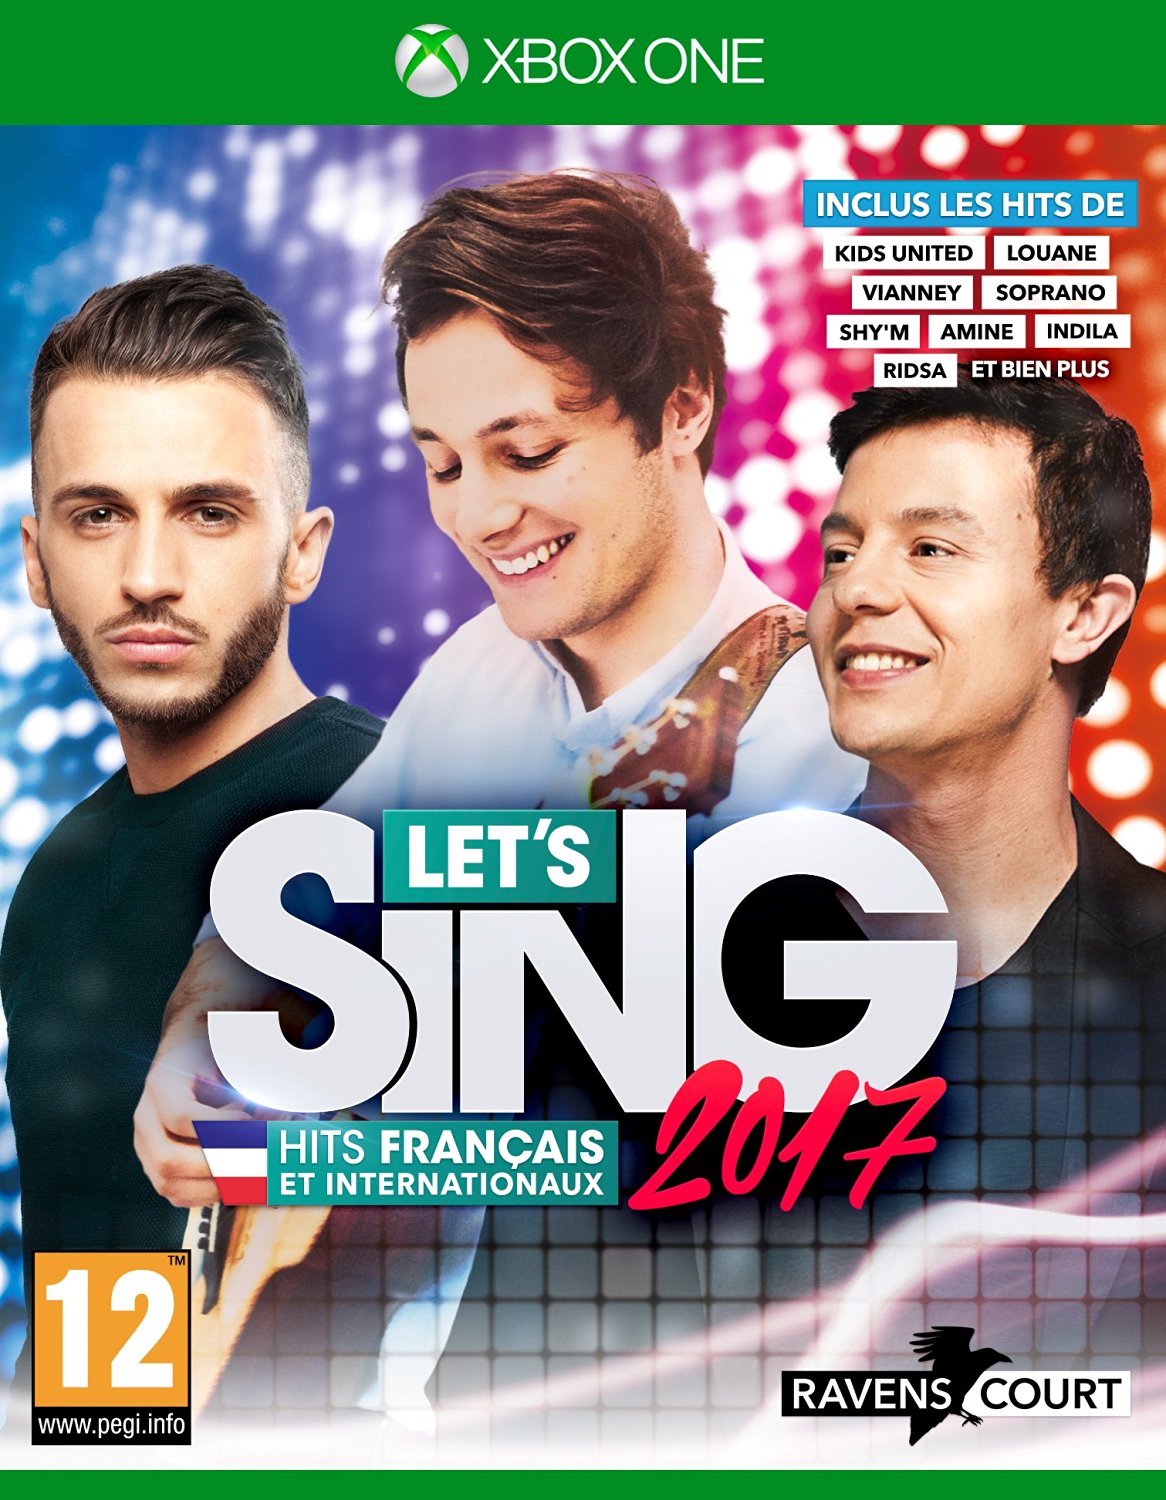 Lets Sing 2017 Hits Francaiss et Internationaux